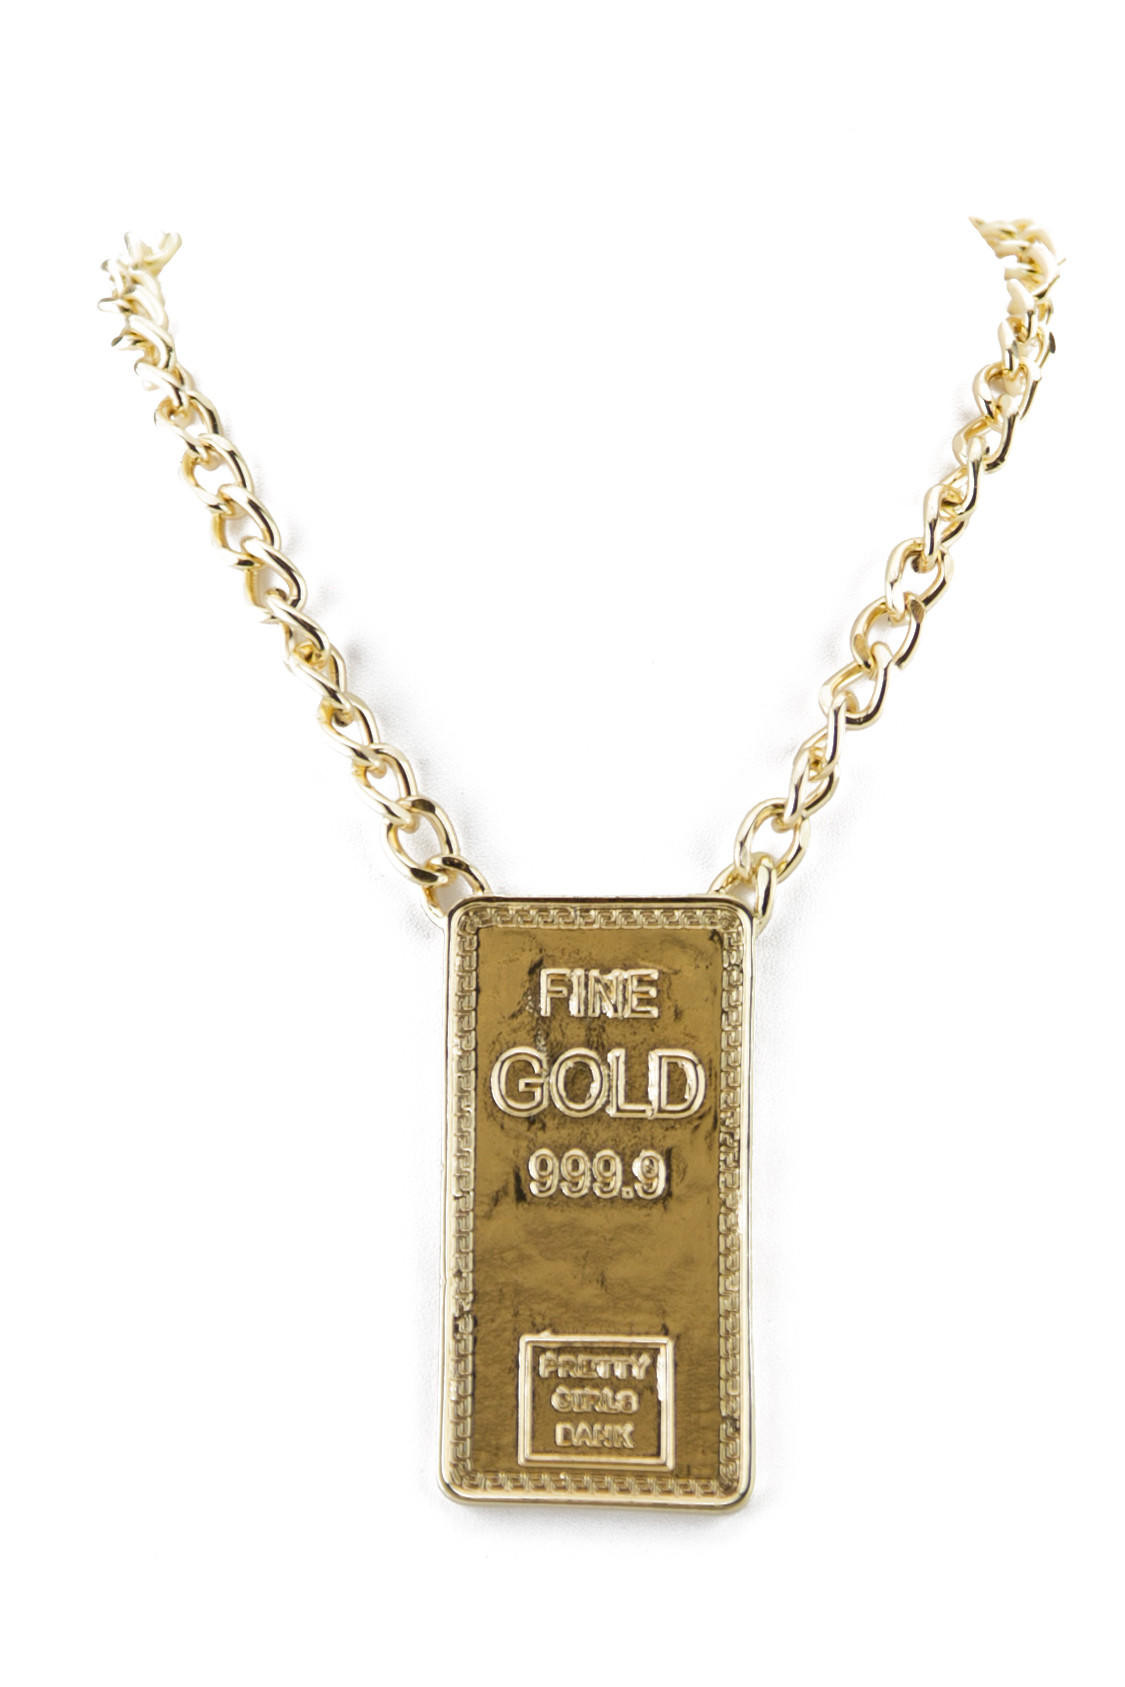 Gold Bar Pendant Necklace
 FINE GOLD BAR PENDANT NECKLACE from Haute & Rebellious